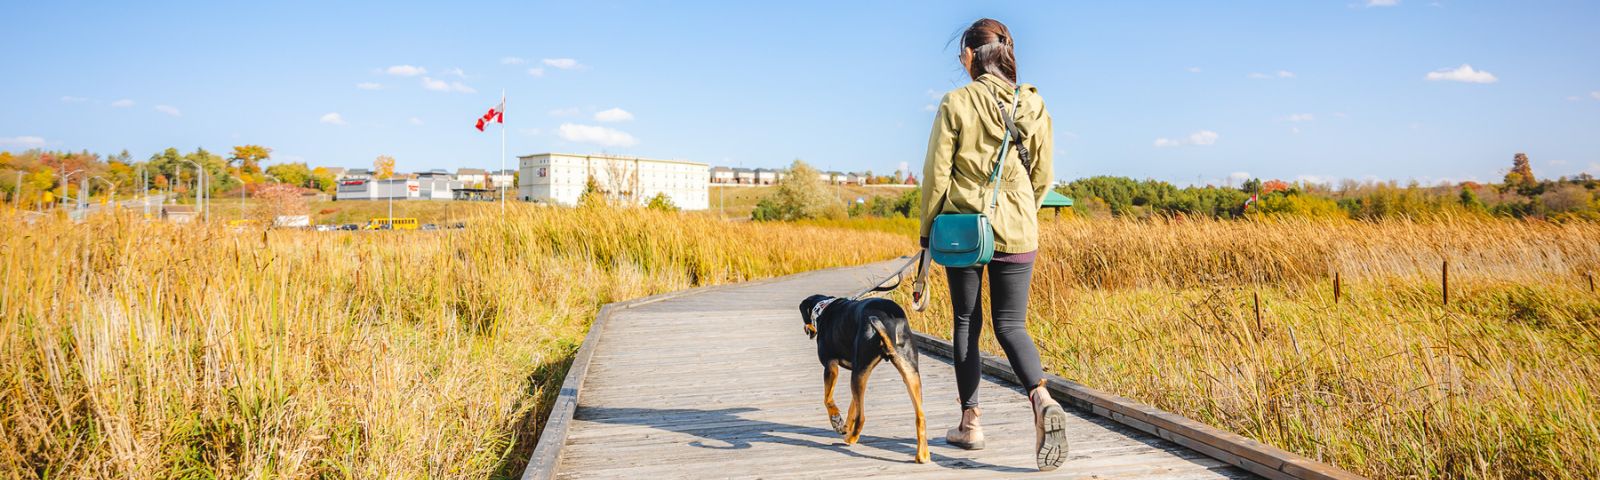 A woman walks her dog through a trail in a field